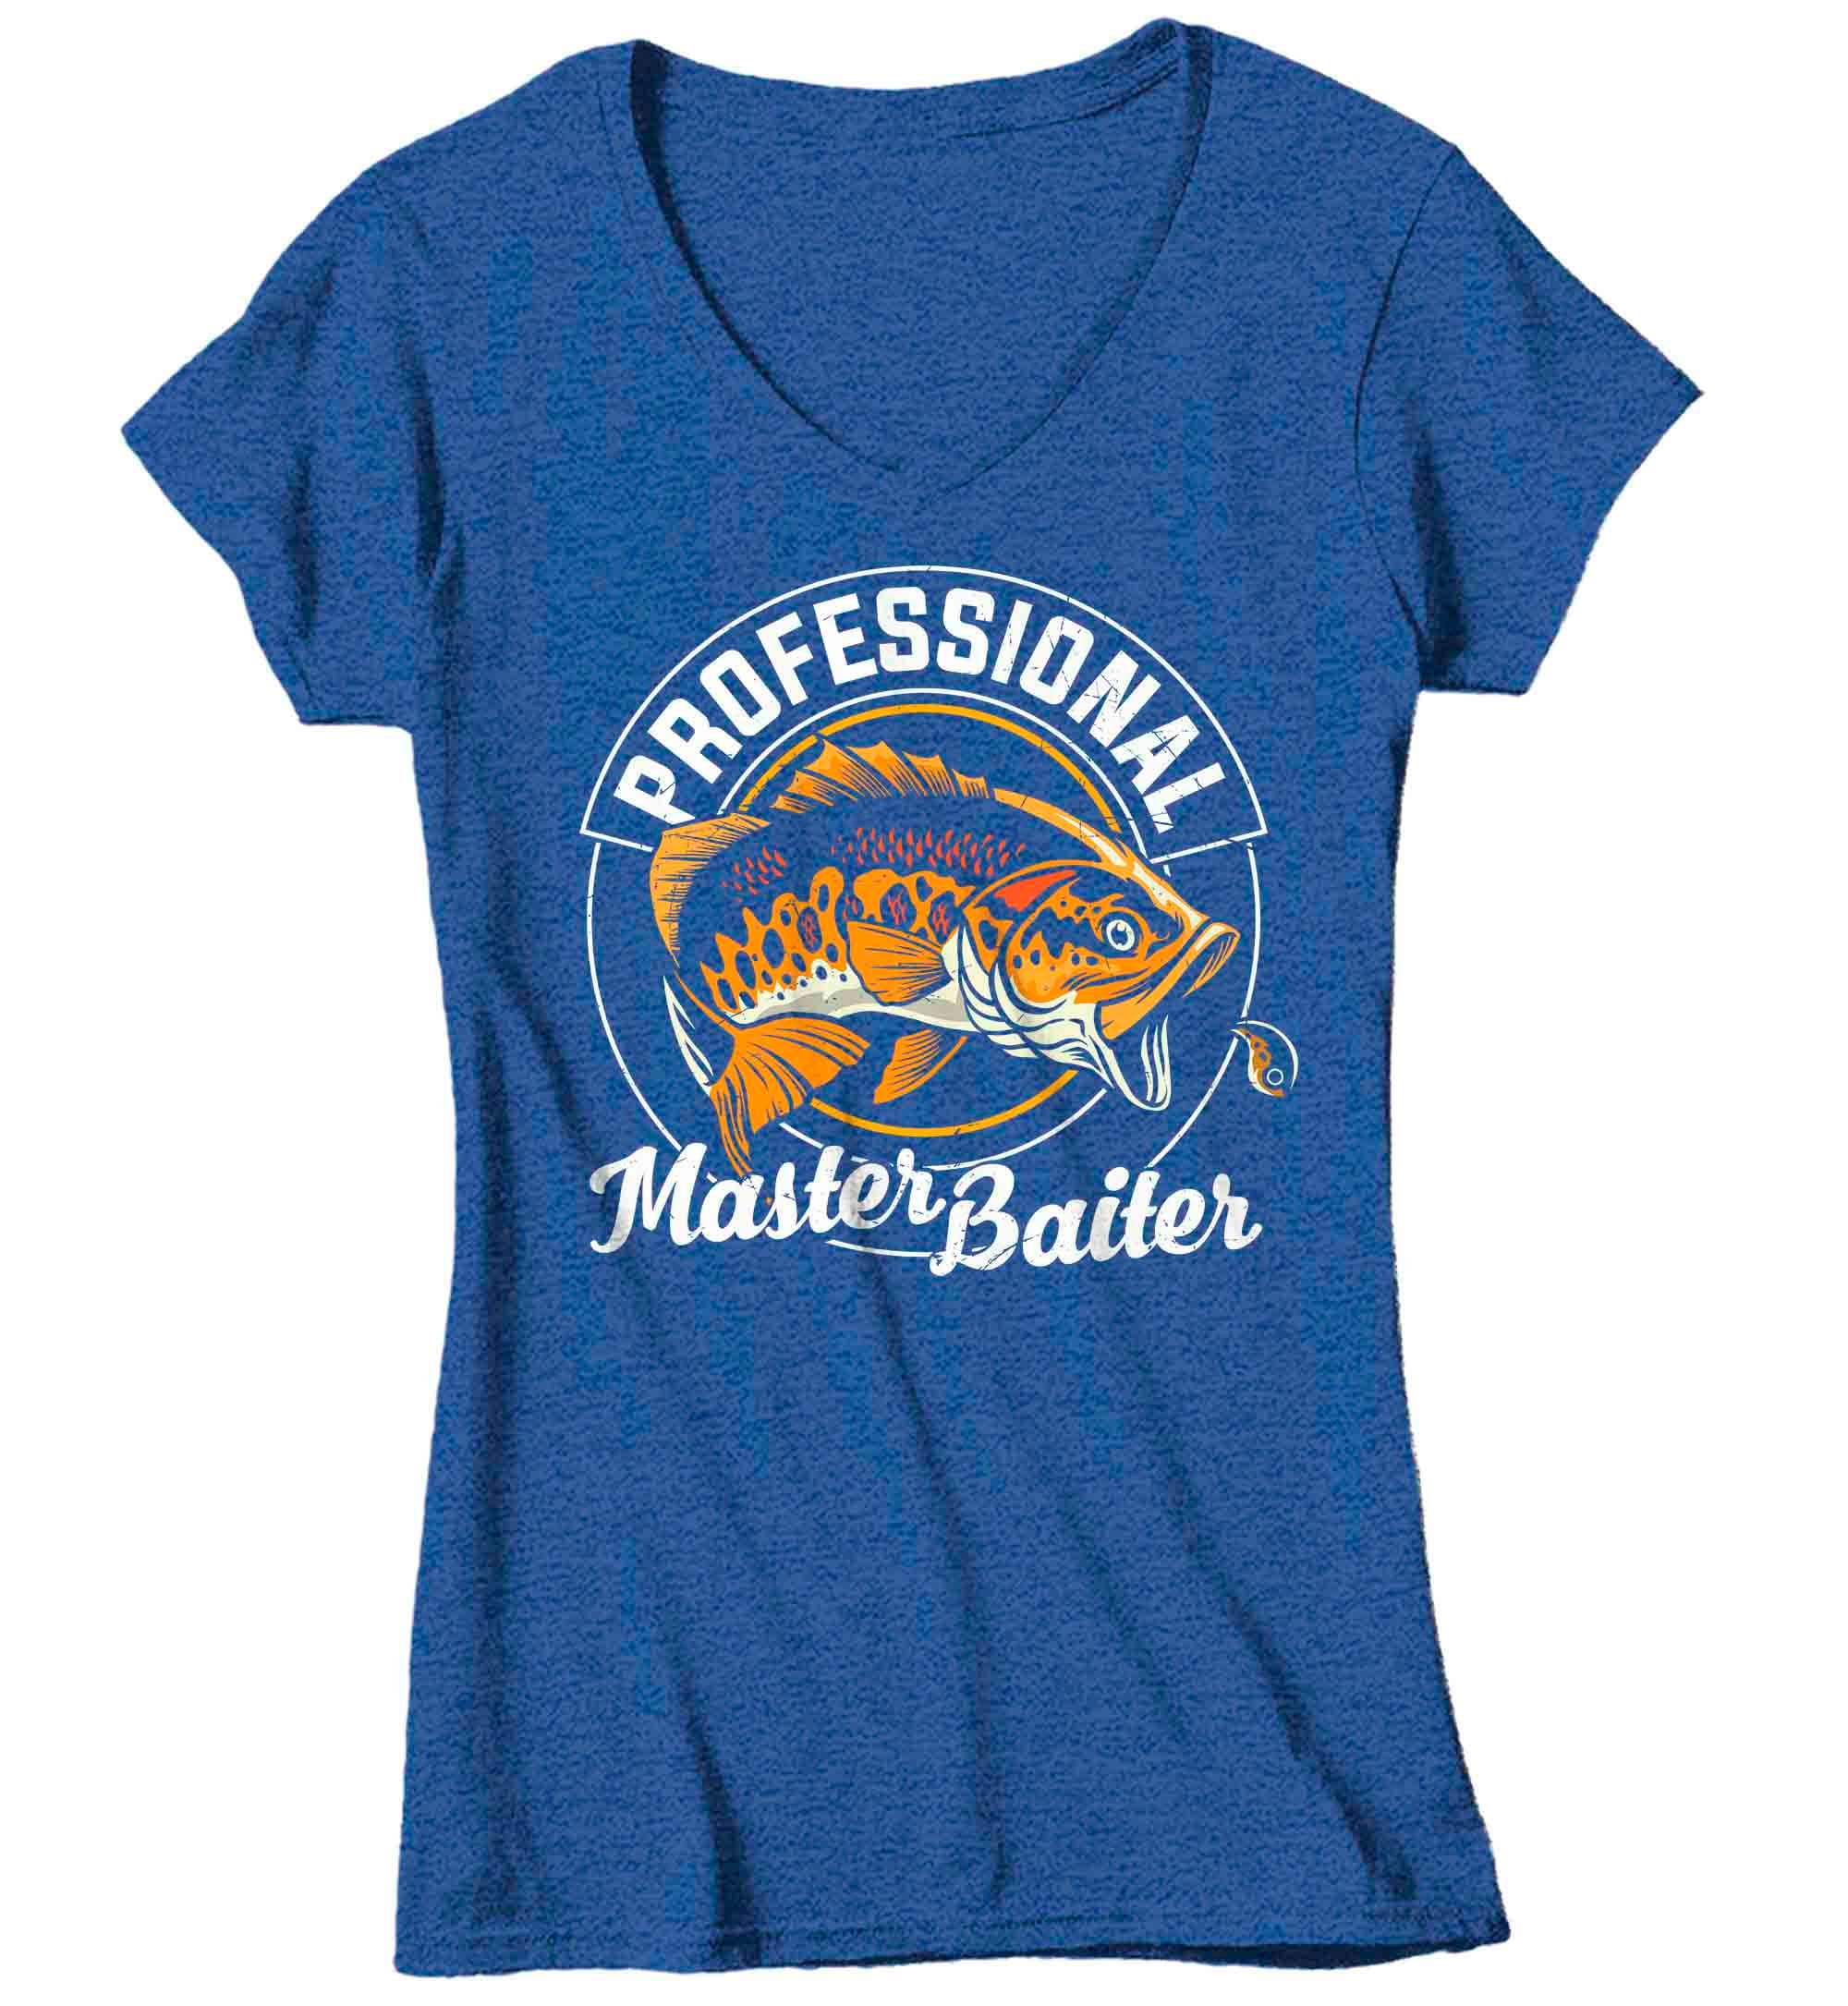 Women's Funny Fishing T-shirt Professional Master Baiter Vintage Shirt  Fisherman Gift Humor Bass Fish Tee Ladies Graphic Tee -  Norway